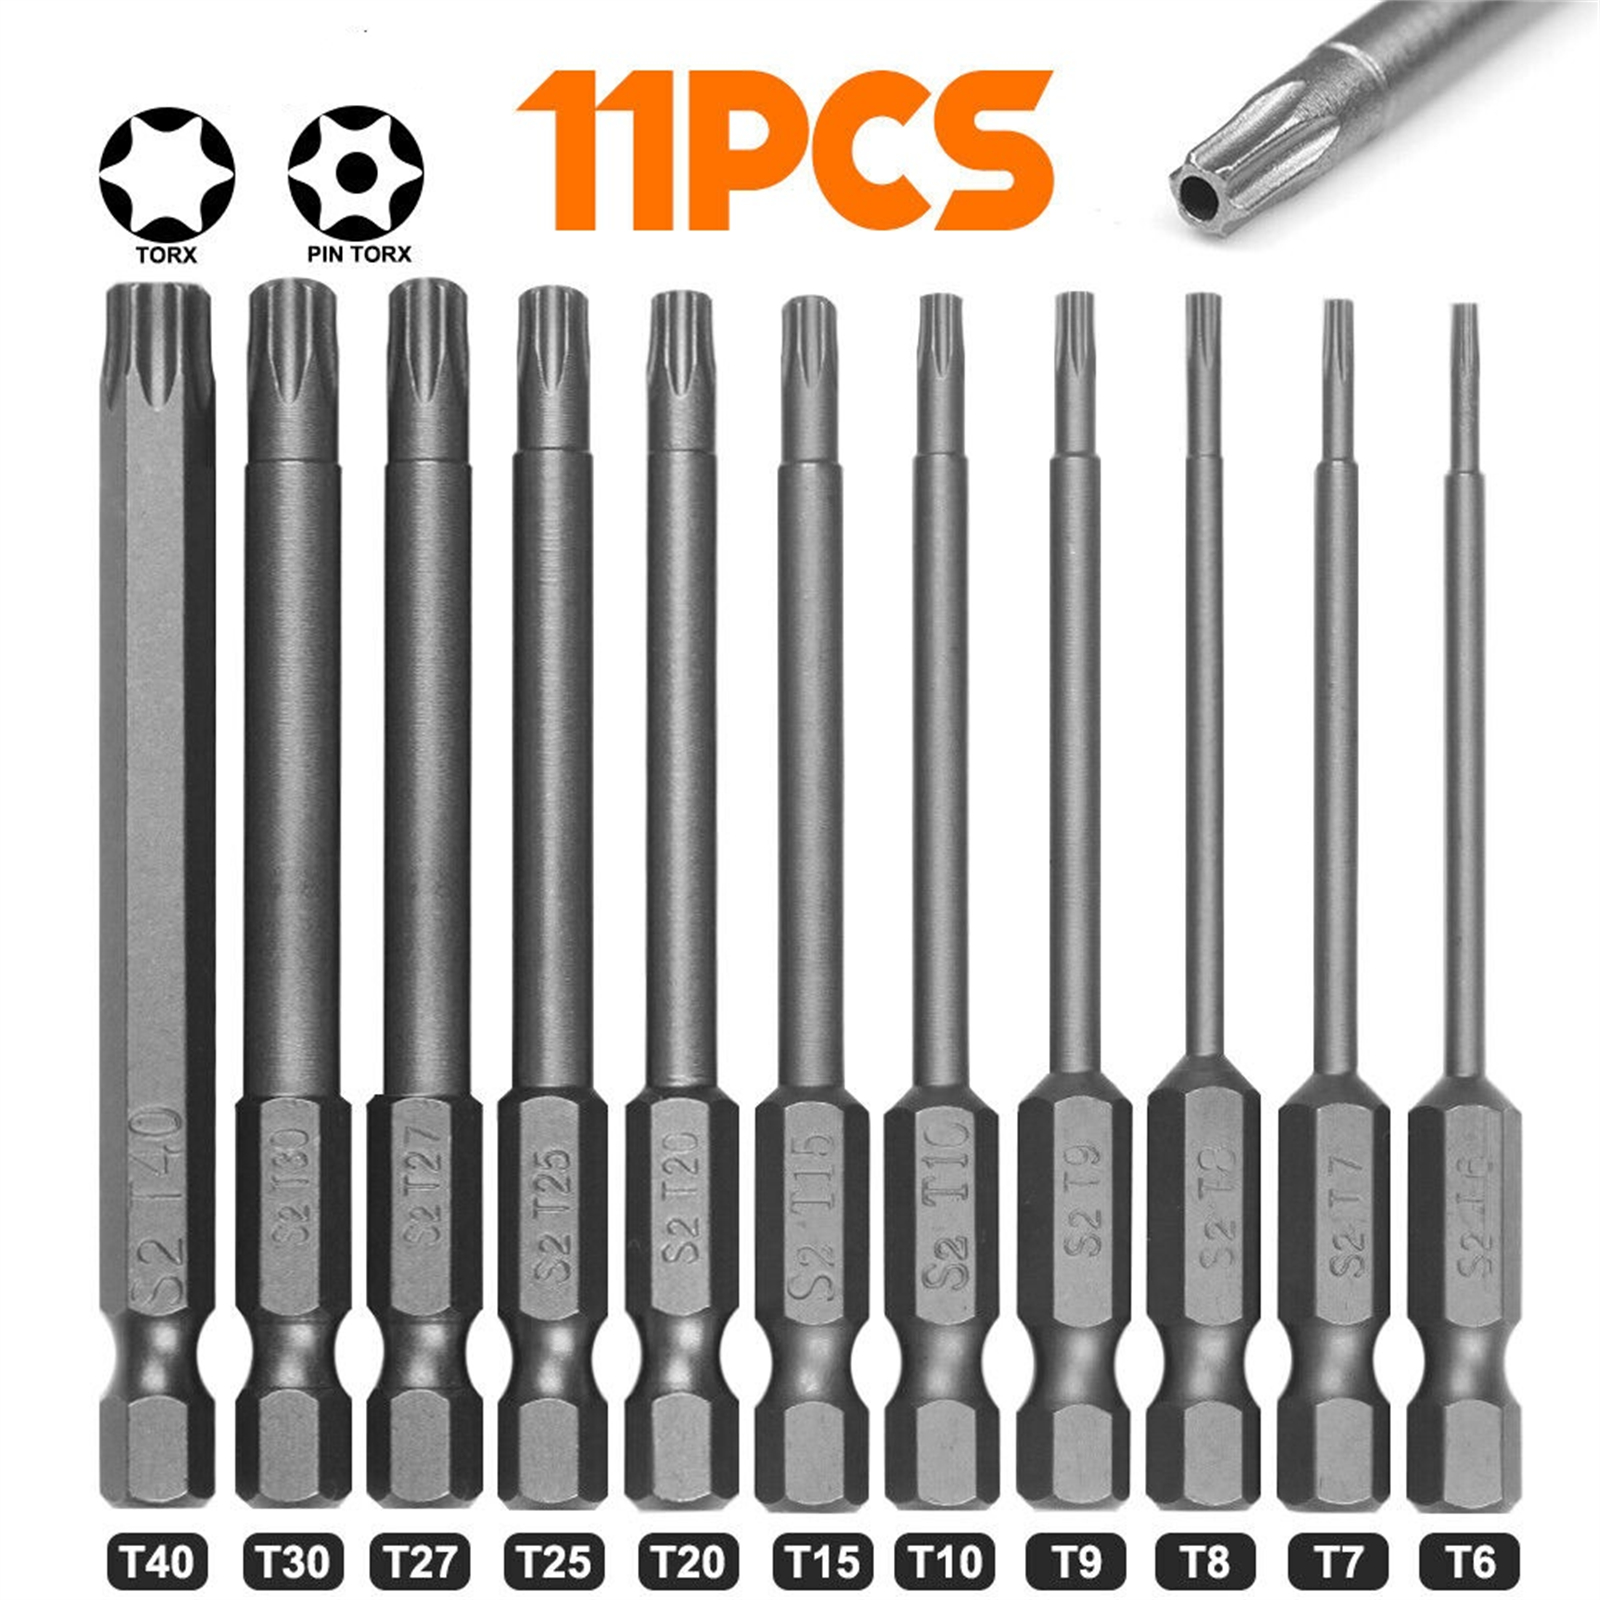 11PCs Torx Bit Set Extra Long Bit Socket Set S2 Alloy Steel Bit Screwdriver Wrench Drill Bit Set 1/4 Inch Drive 75mm Socket Drill Bit 11pcs